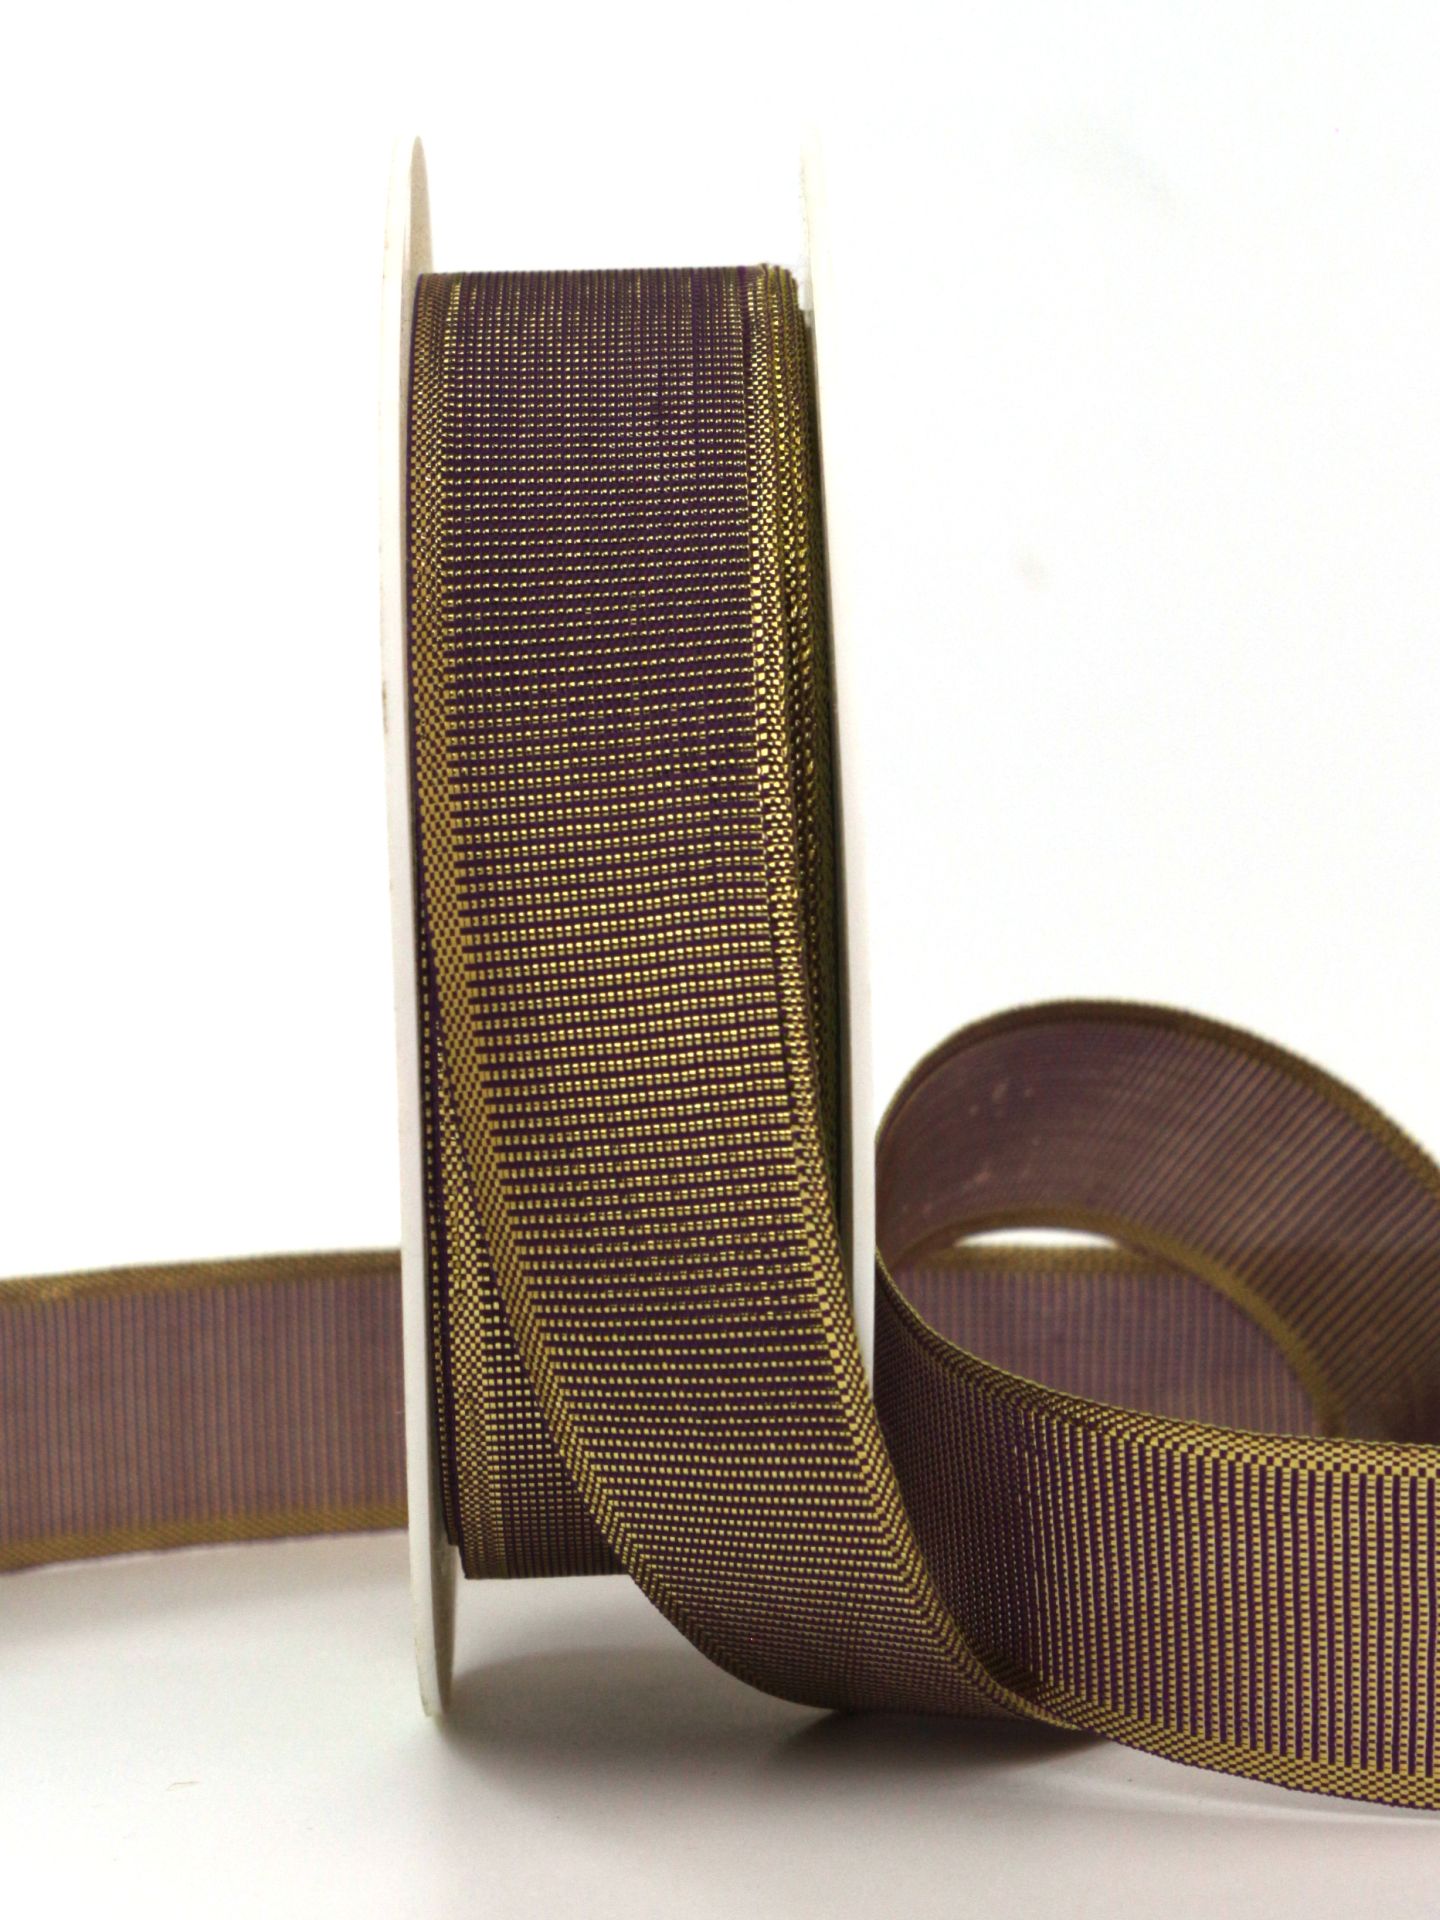 Metallic Ripsband, lila/gold, 25 mm breit, 25 m Rolle - geschenkband-weihnachten-dauersortiment, weihnachtsband, ripsband, geschenkband-weihnachten, weihnachtsbaender